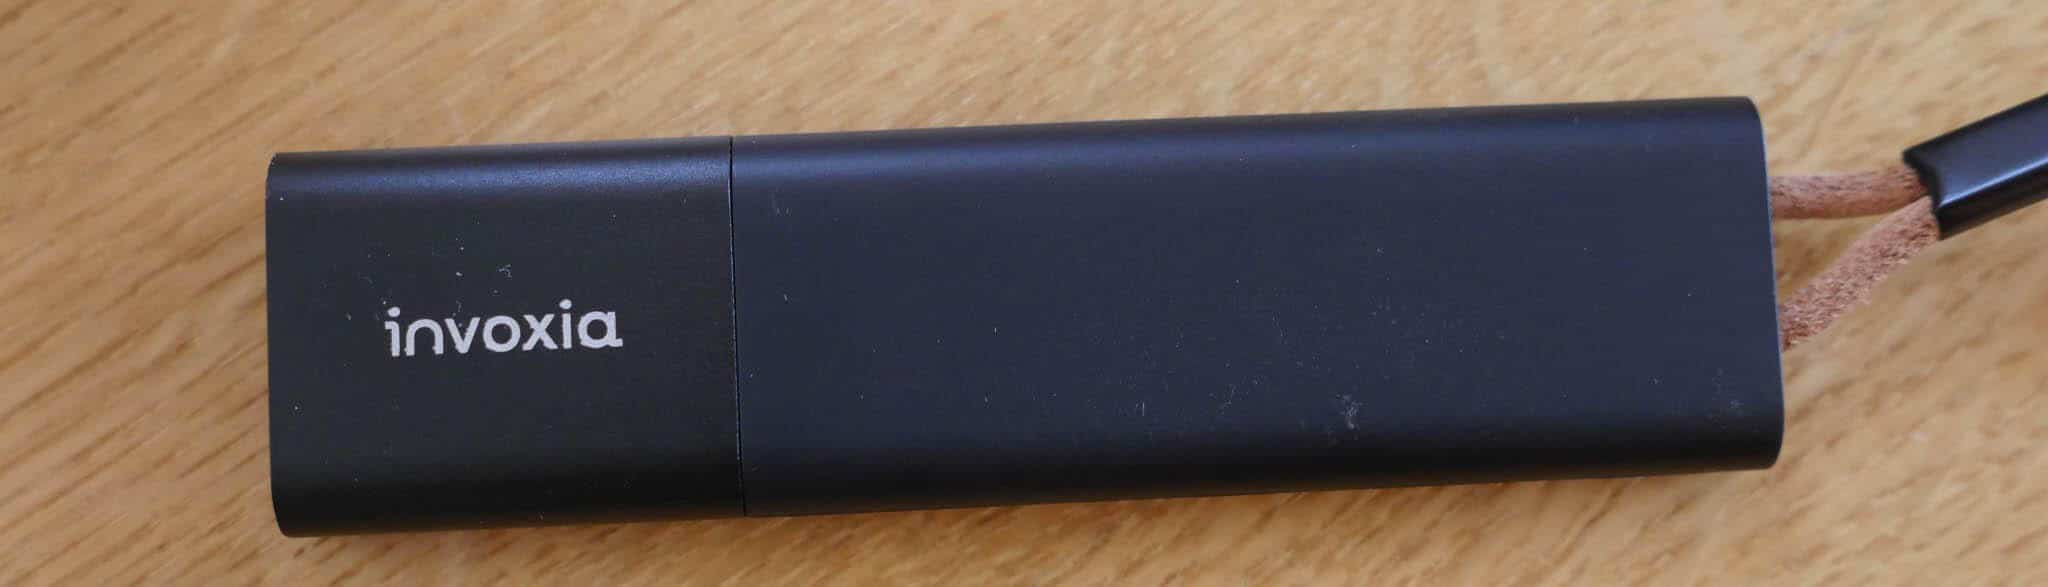 Invoxia, une petite balise connectée qui servira d'alarme antivol